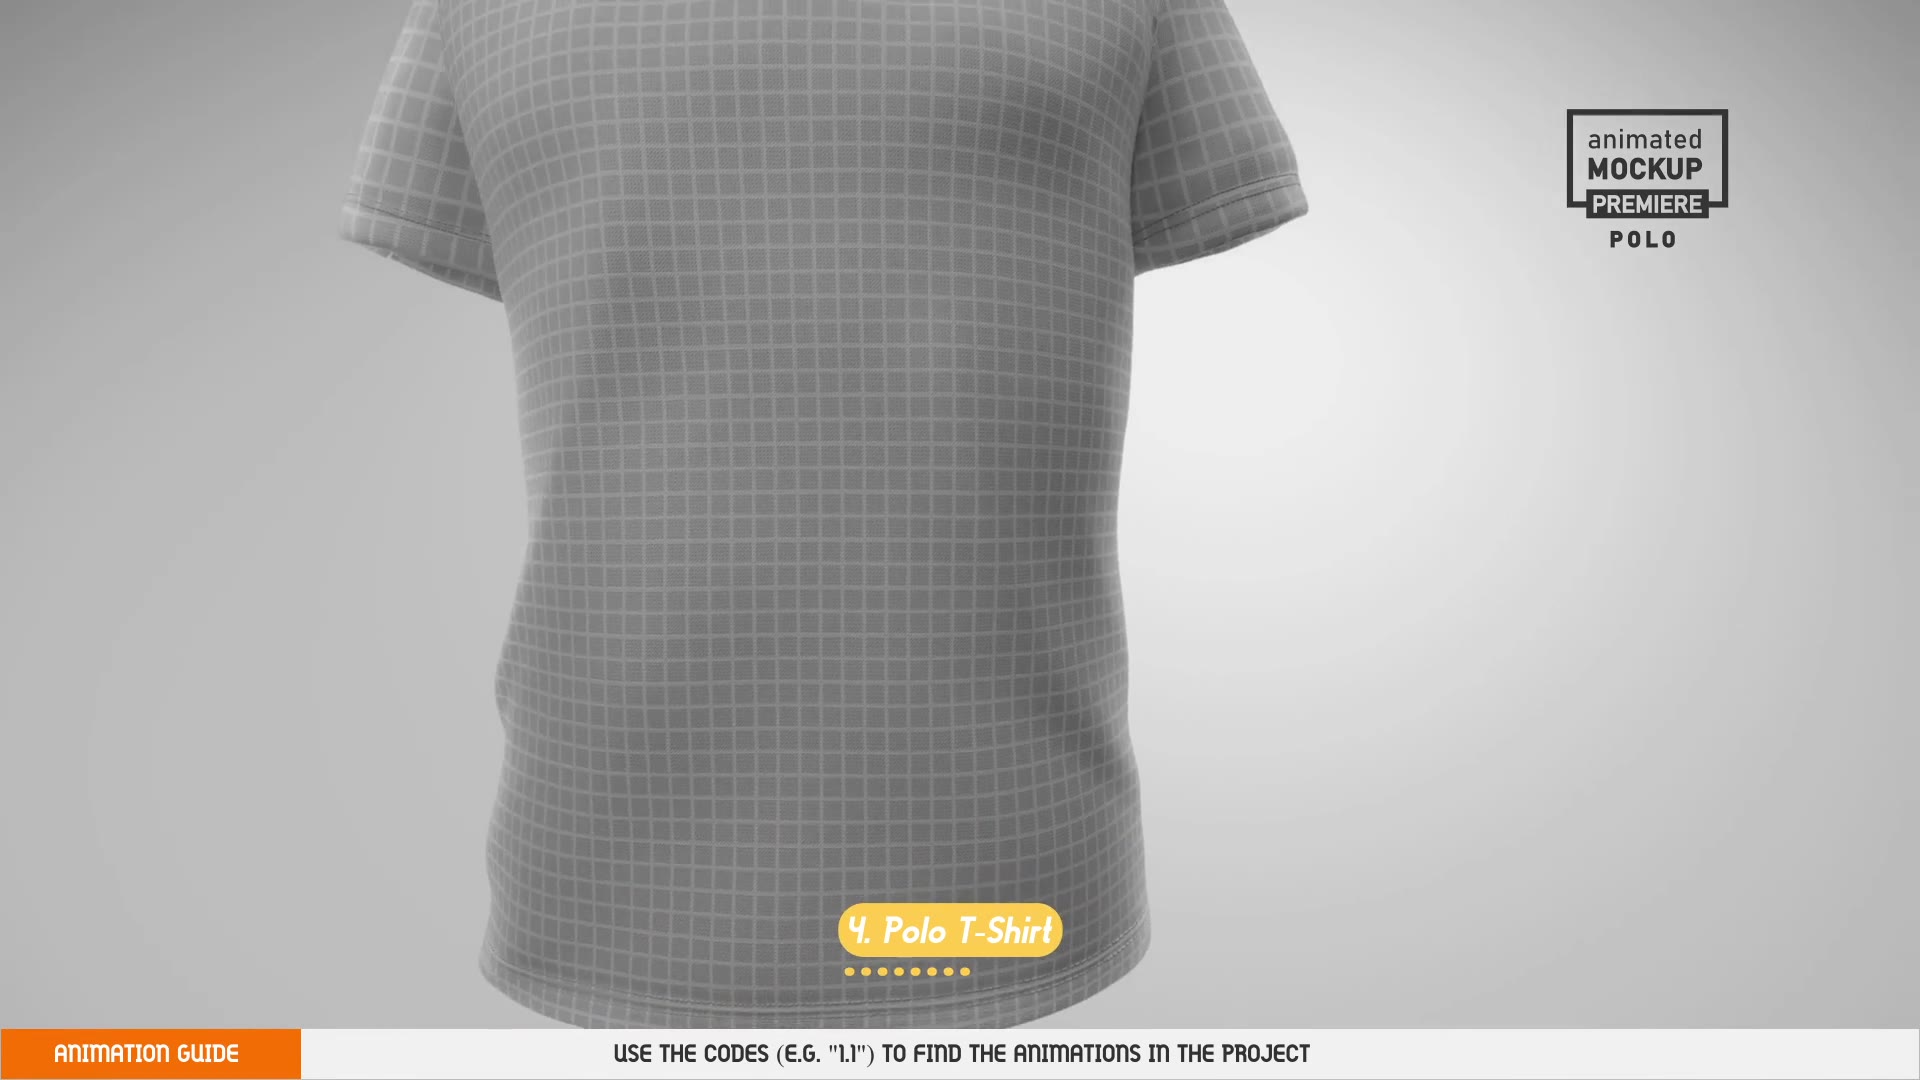 Polo T shirt 5 Scenes Mockup Template Animated Mockup PREMIERE Videohive 33877905 Premiere Pro Image 11